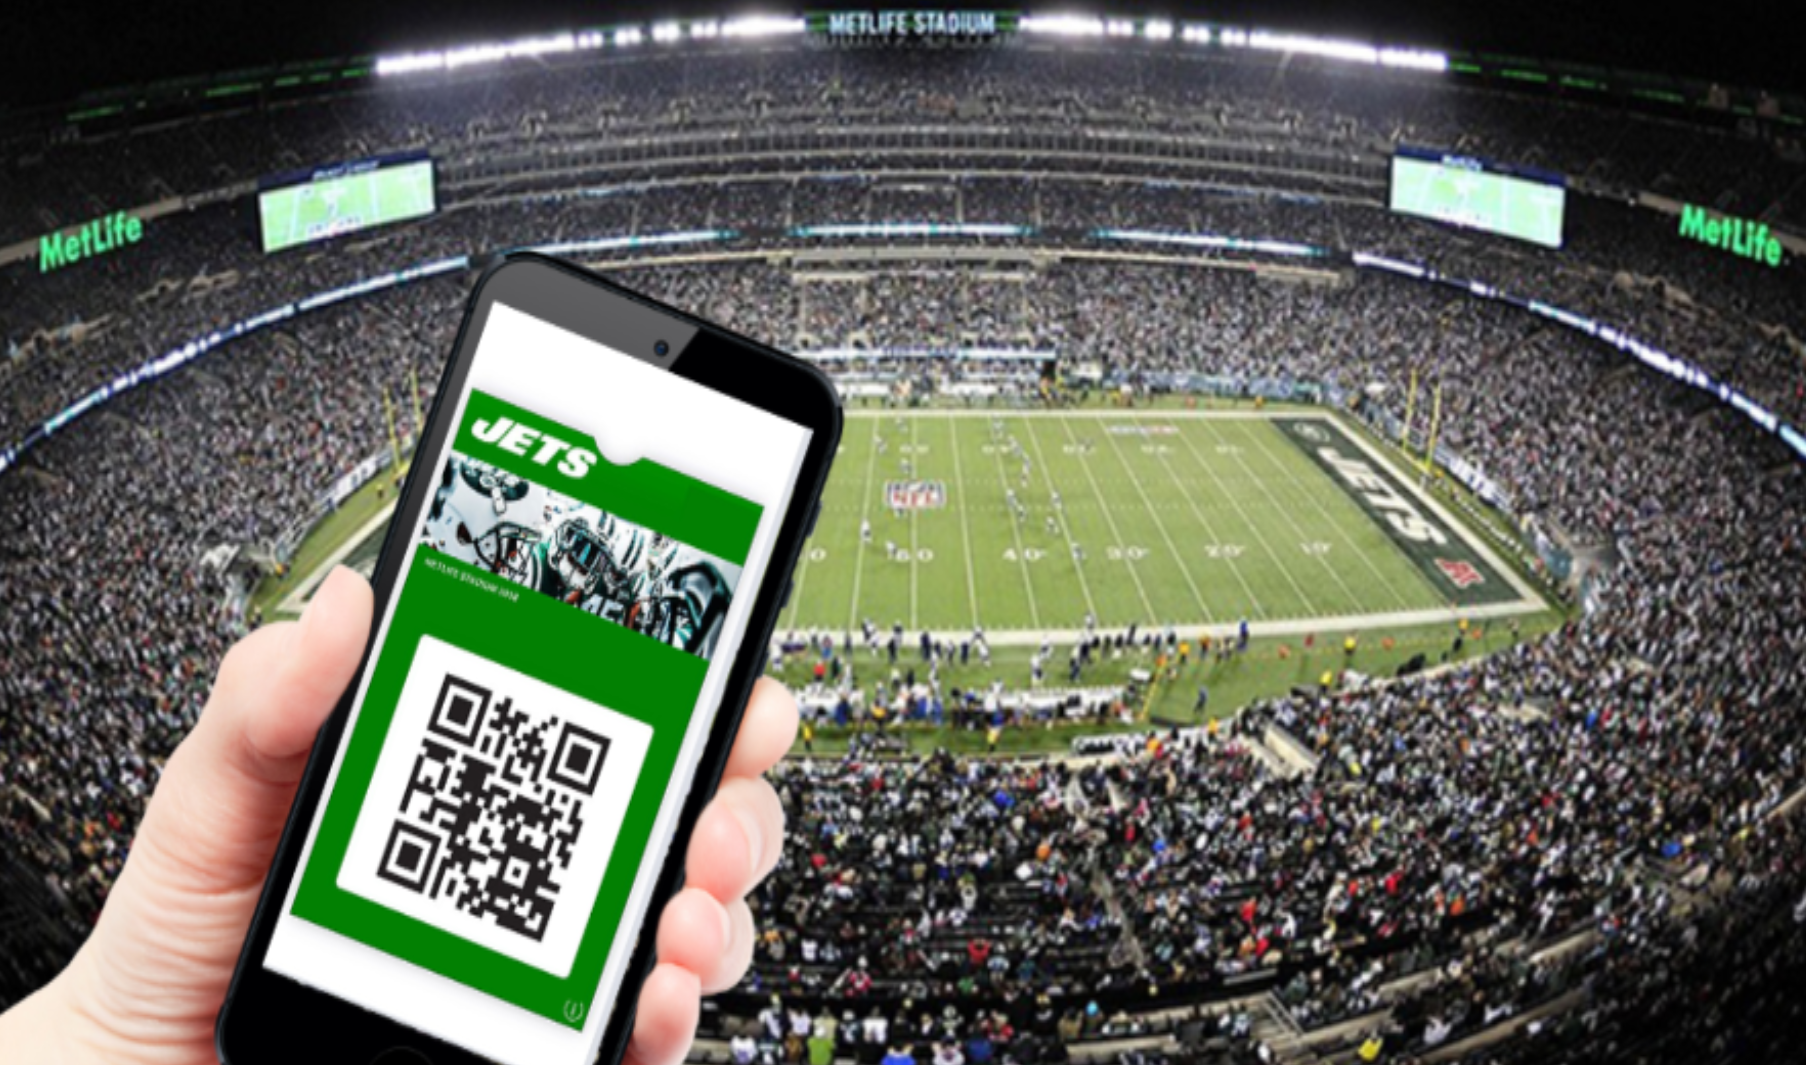 Mobile Ticket Information for Jets Games at MetLife Stadium